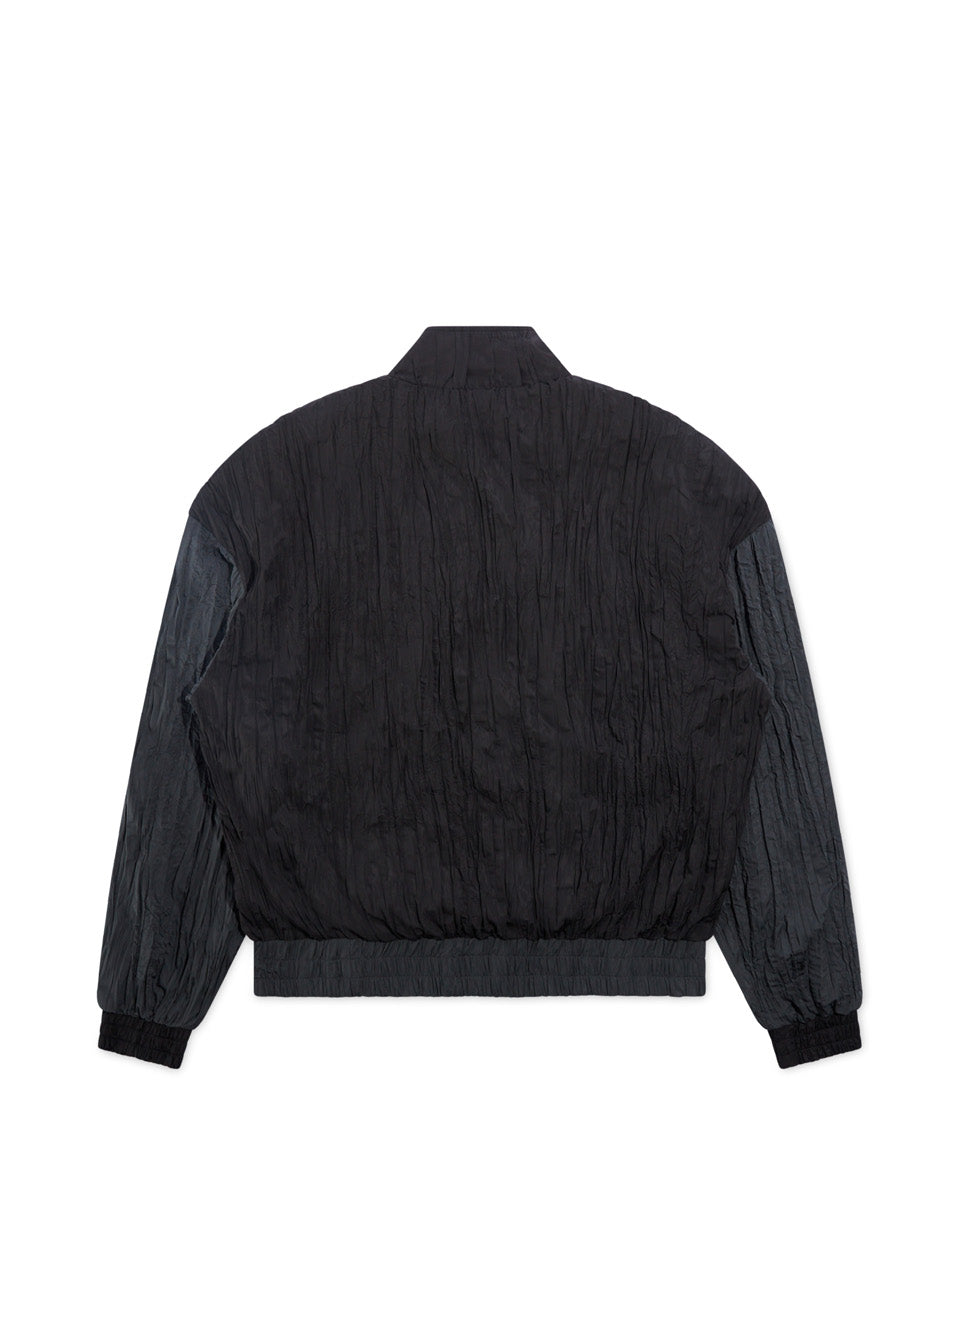 Crinkled Nylon Track Jacket - Black/Grey